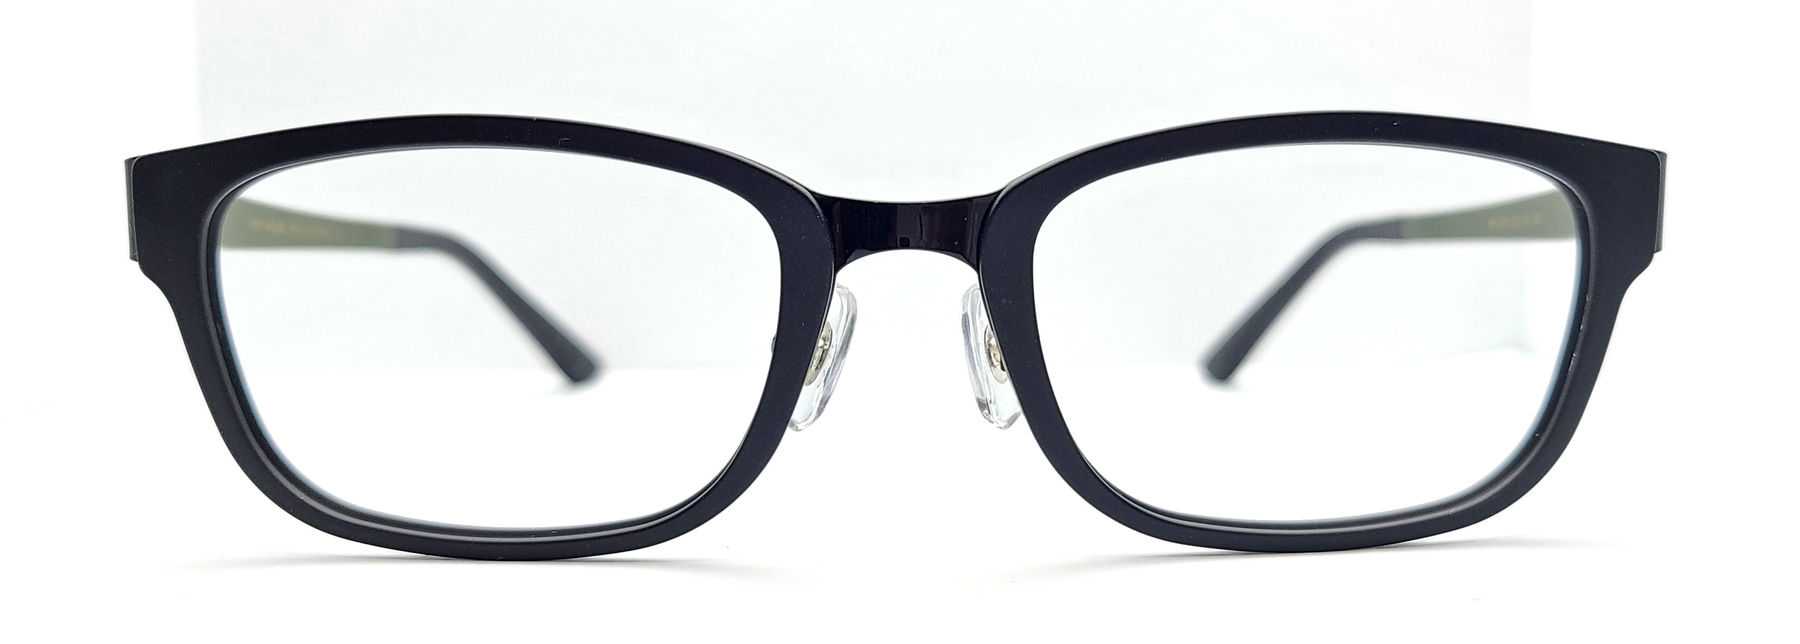 MINIHOUSE M-1281, Korean glasses, sunglasses, eyeglasses, glasses